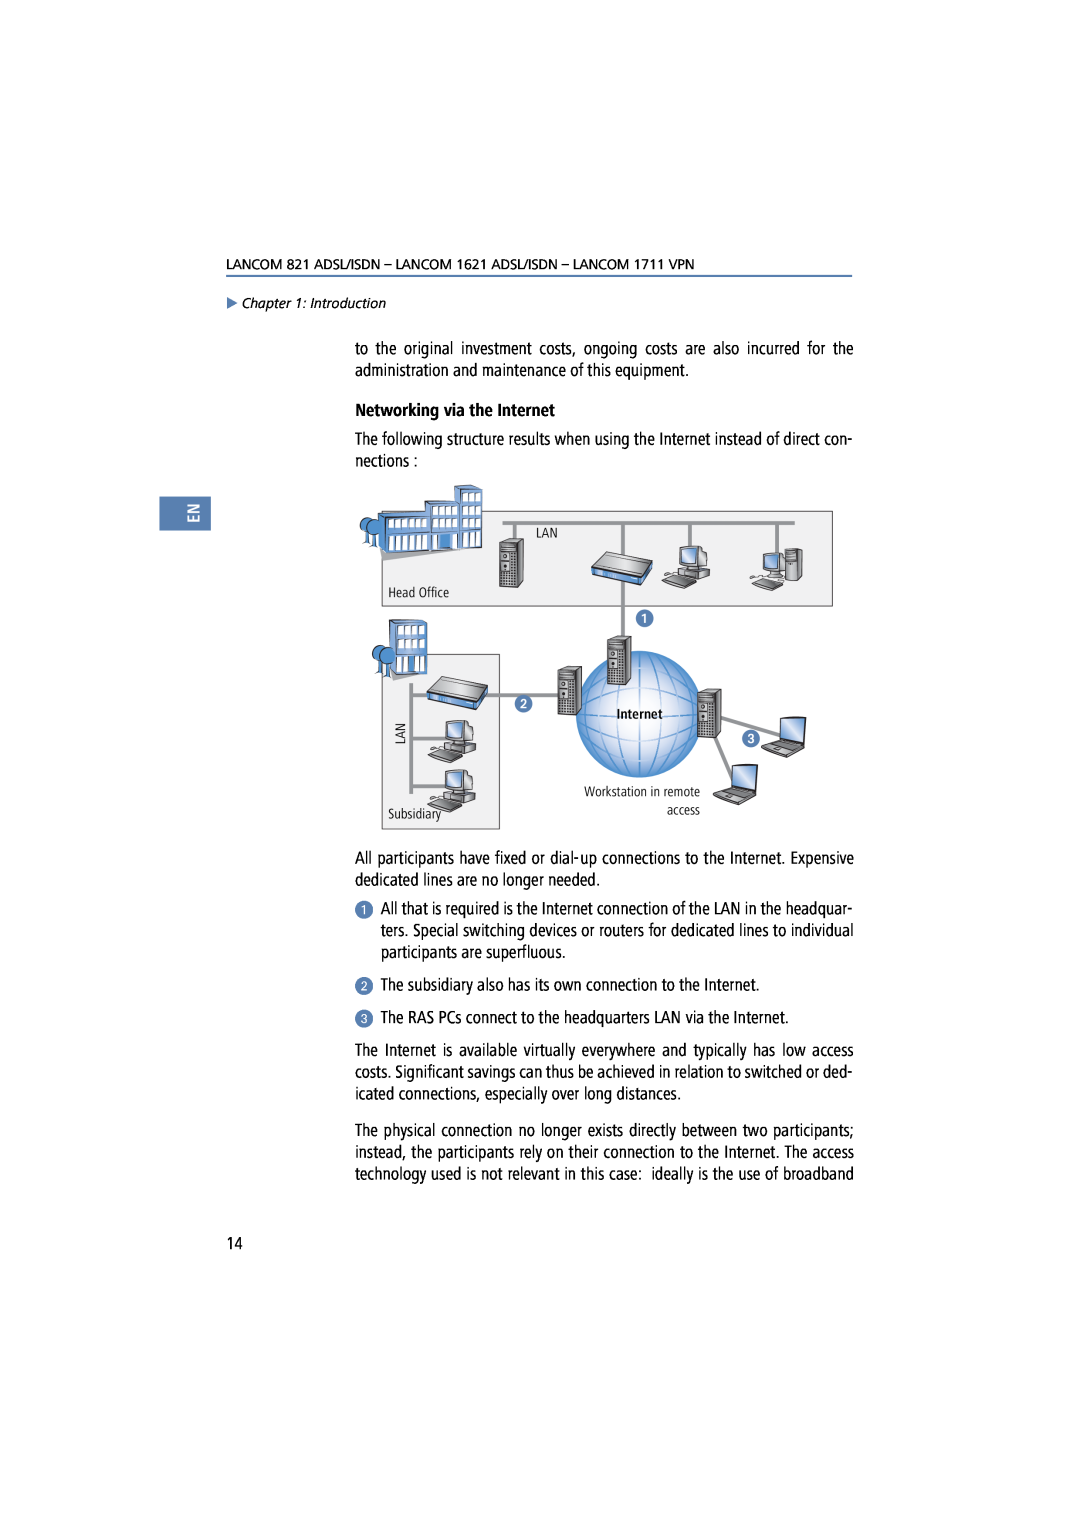 Lancom Systems 1621, 821, 1711 manual Networking via the Internet 